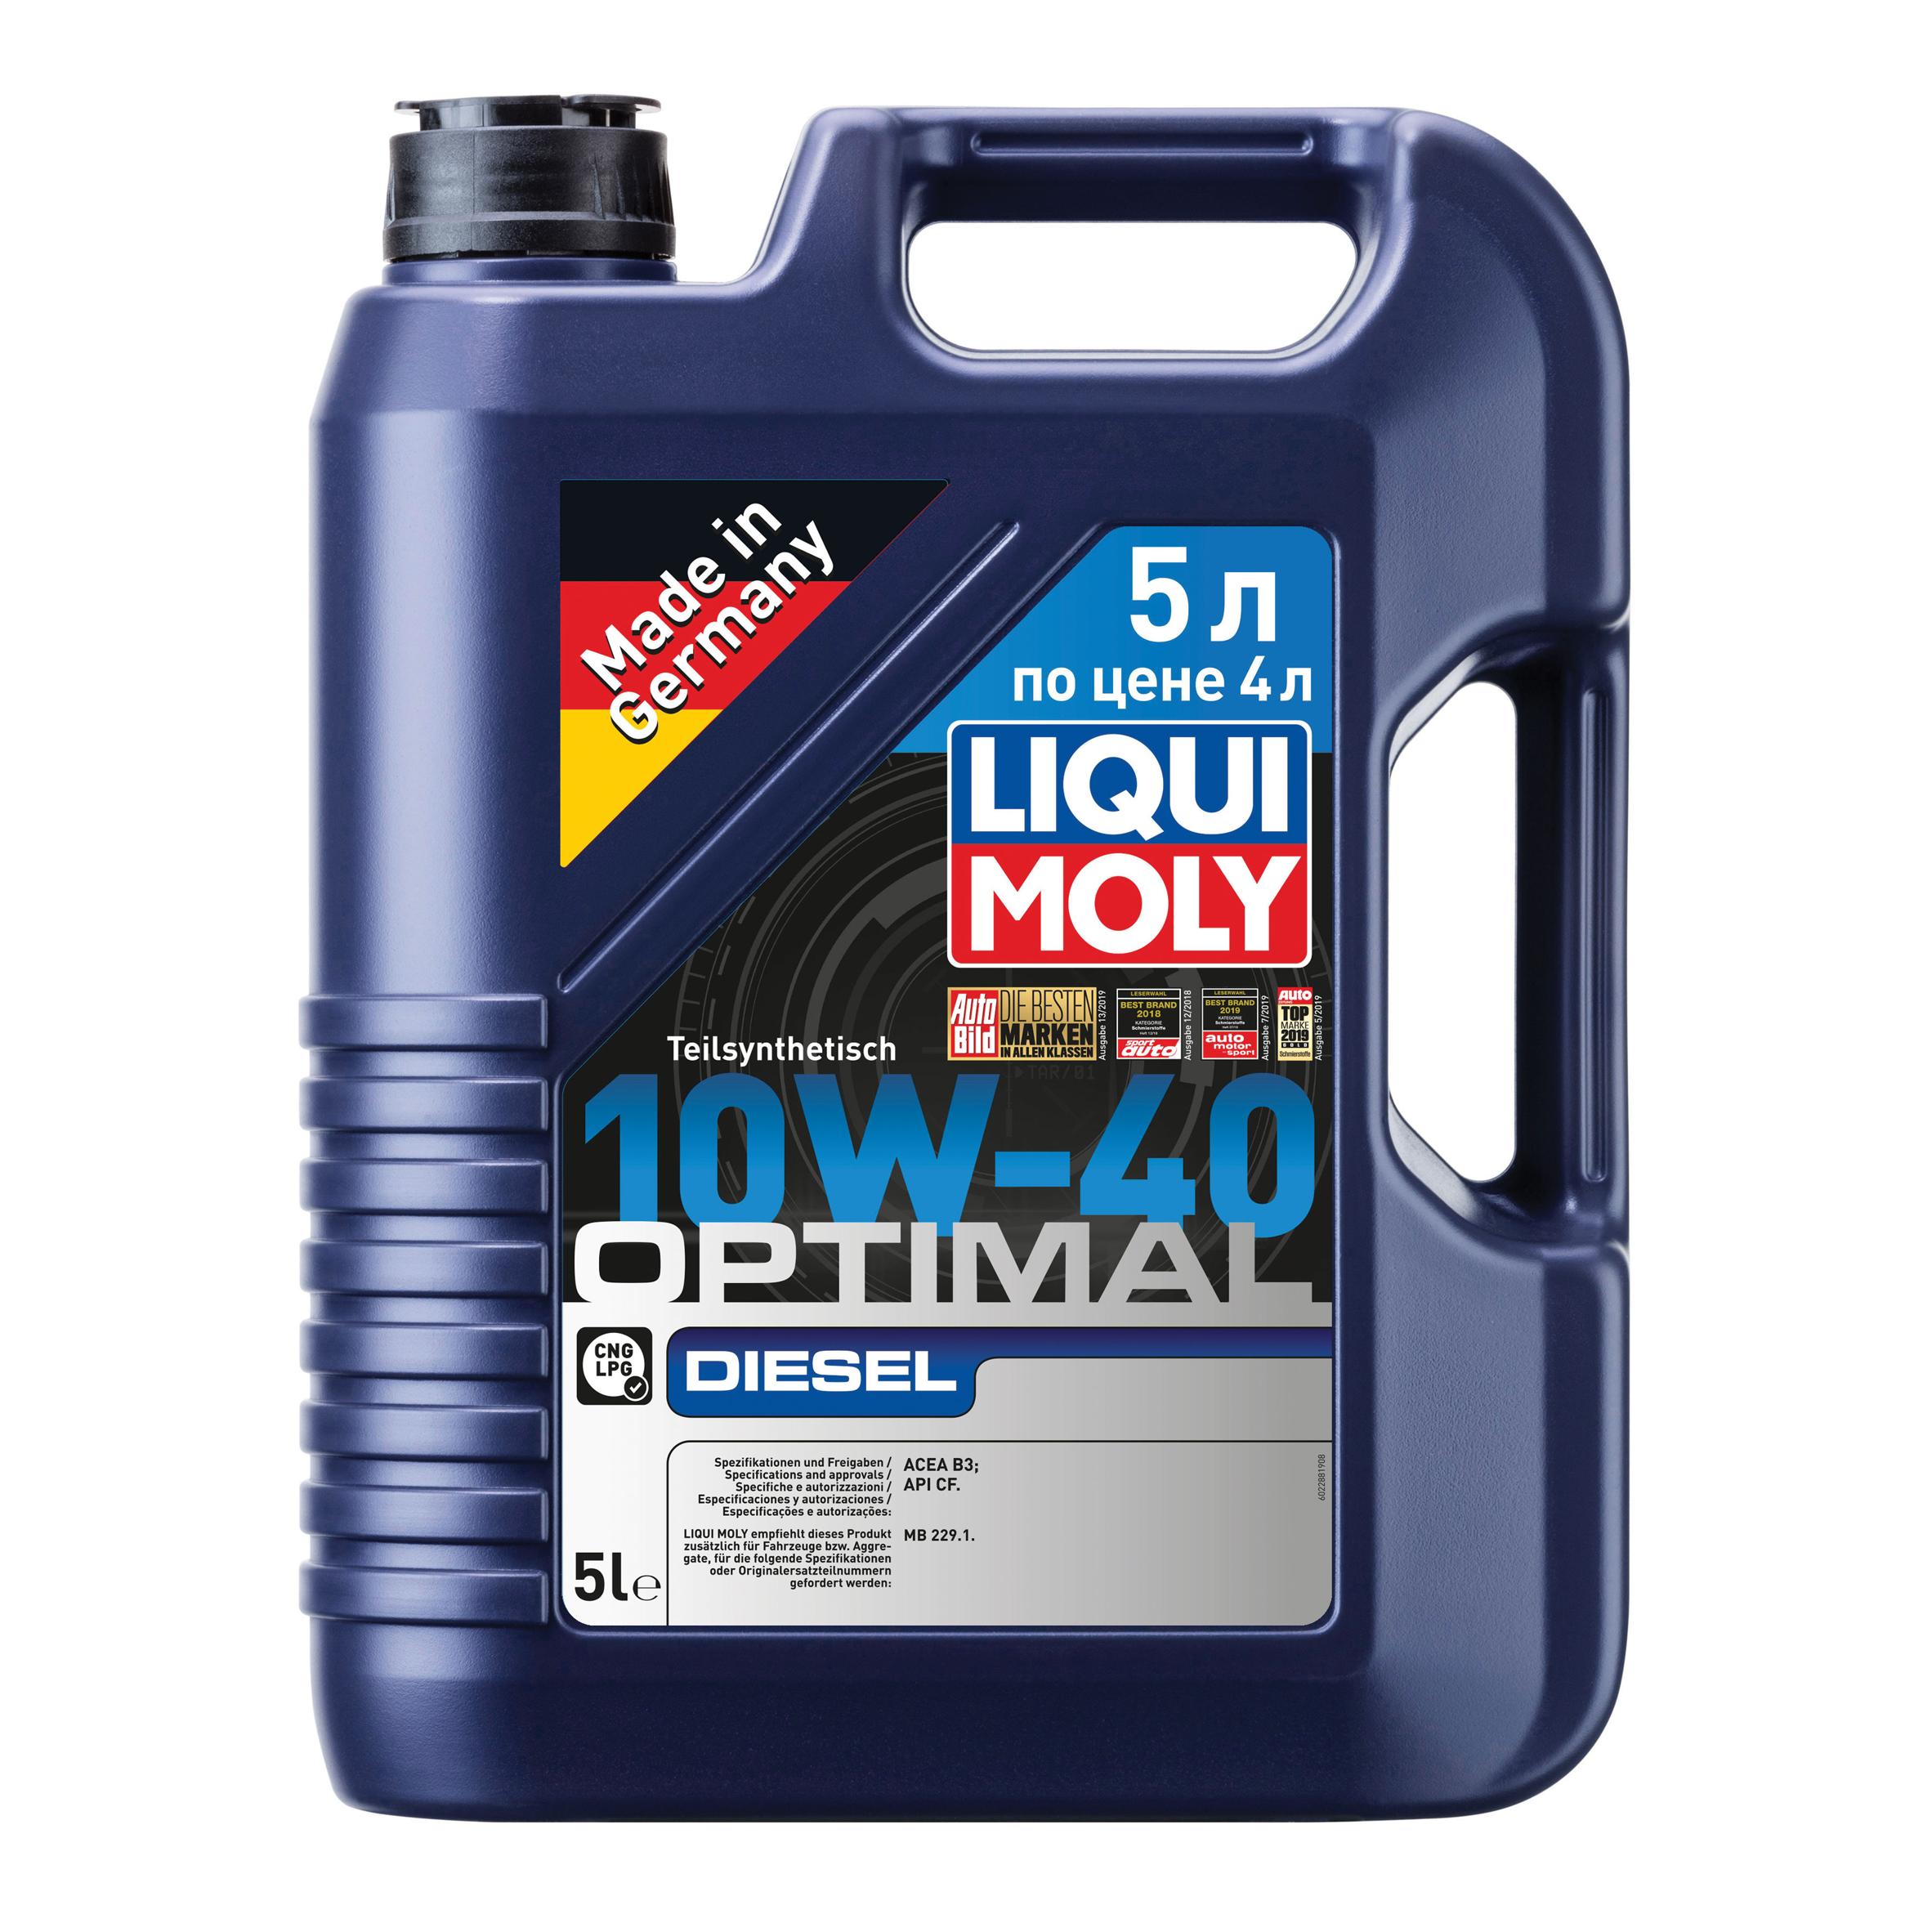 Liqui Moly Optimal Diesel 10w40 B3/CF 5л 2288